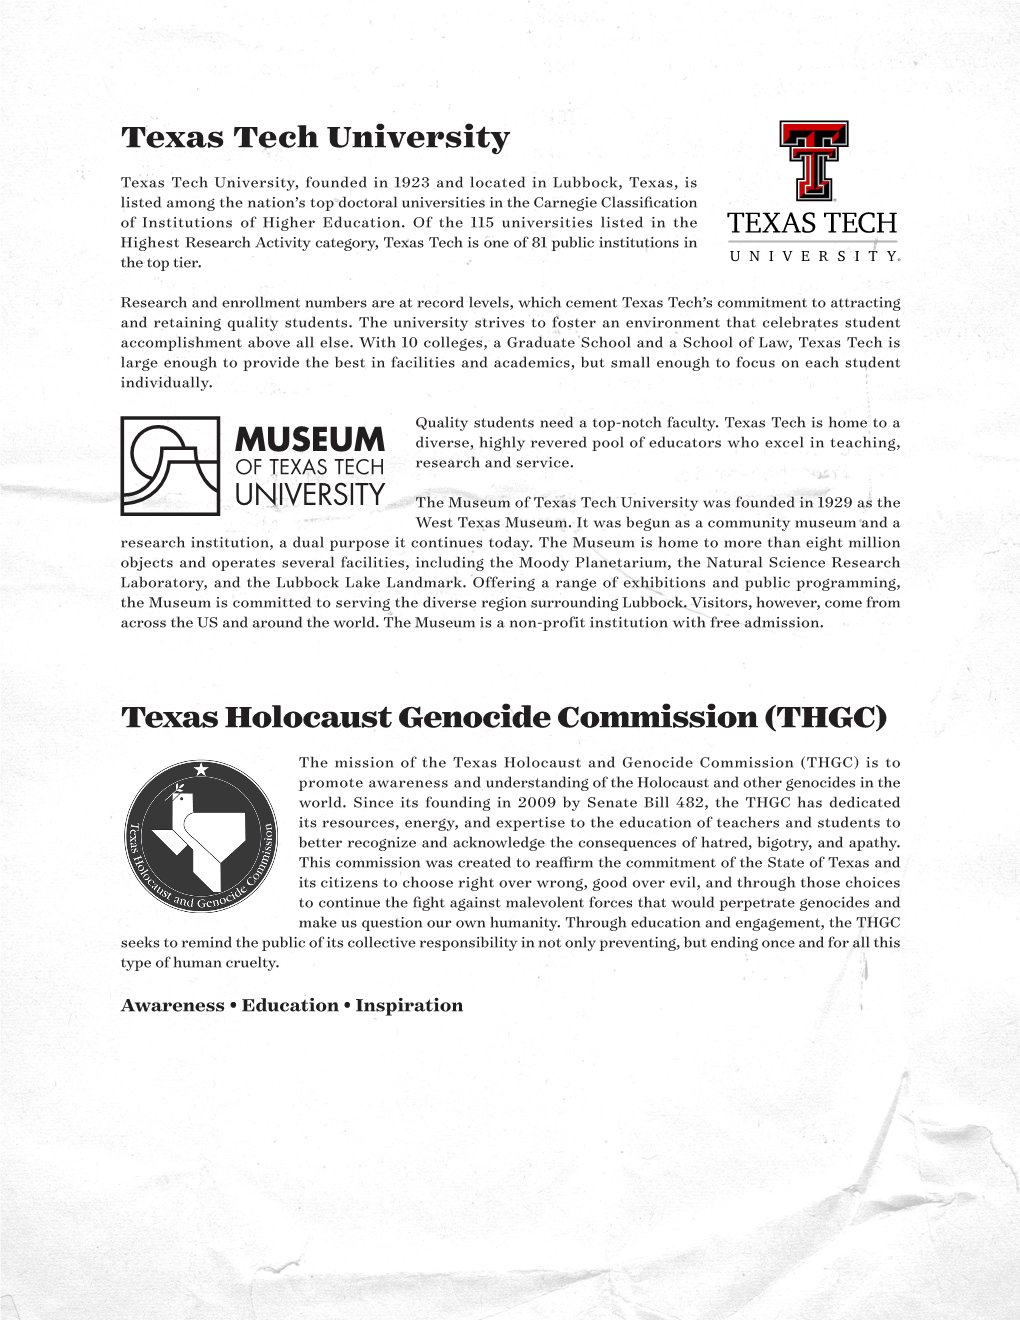 Texas Tech University Texas Holocaust Genocide Commission